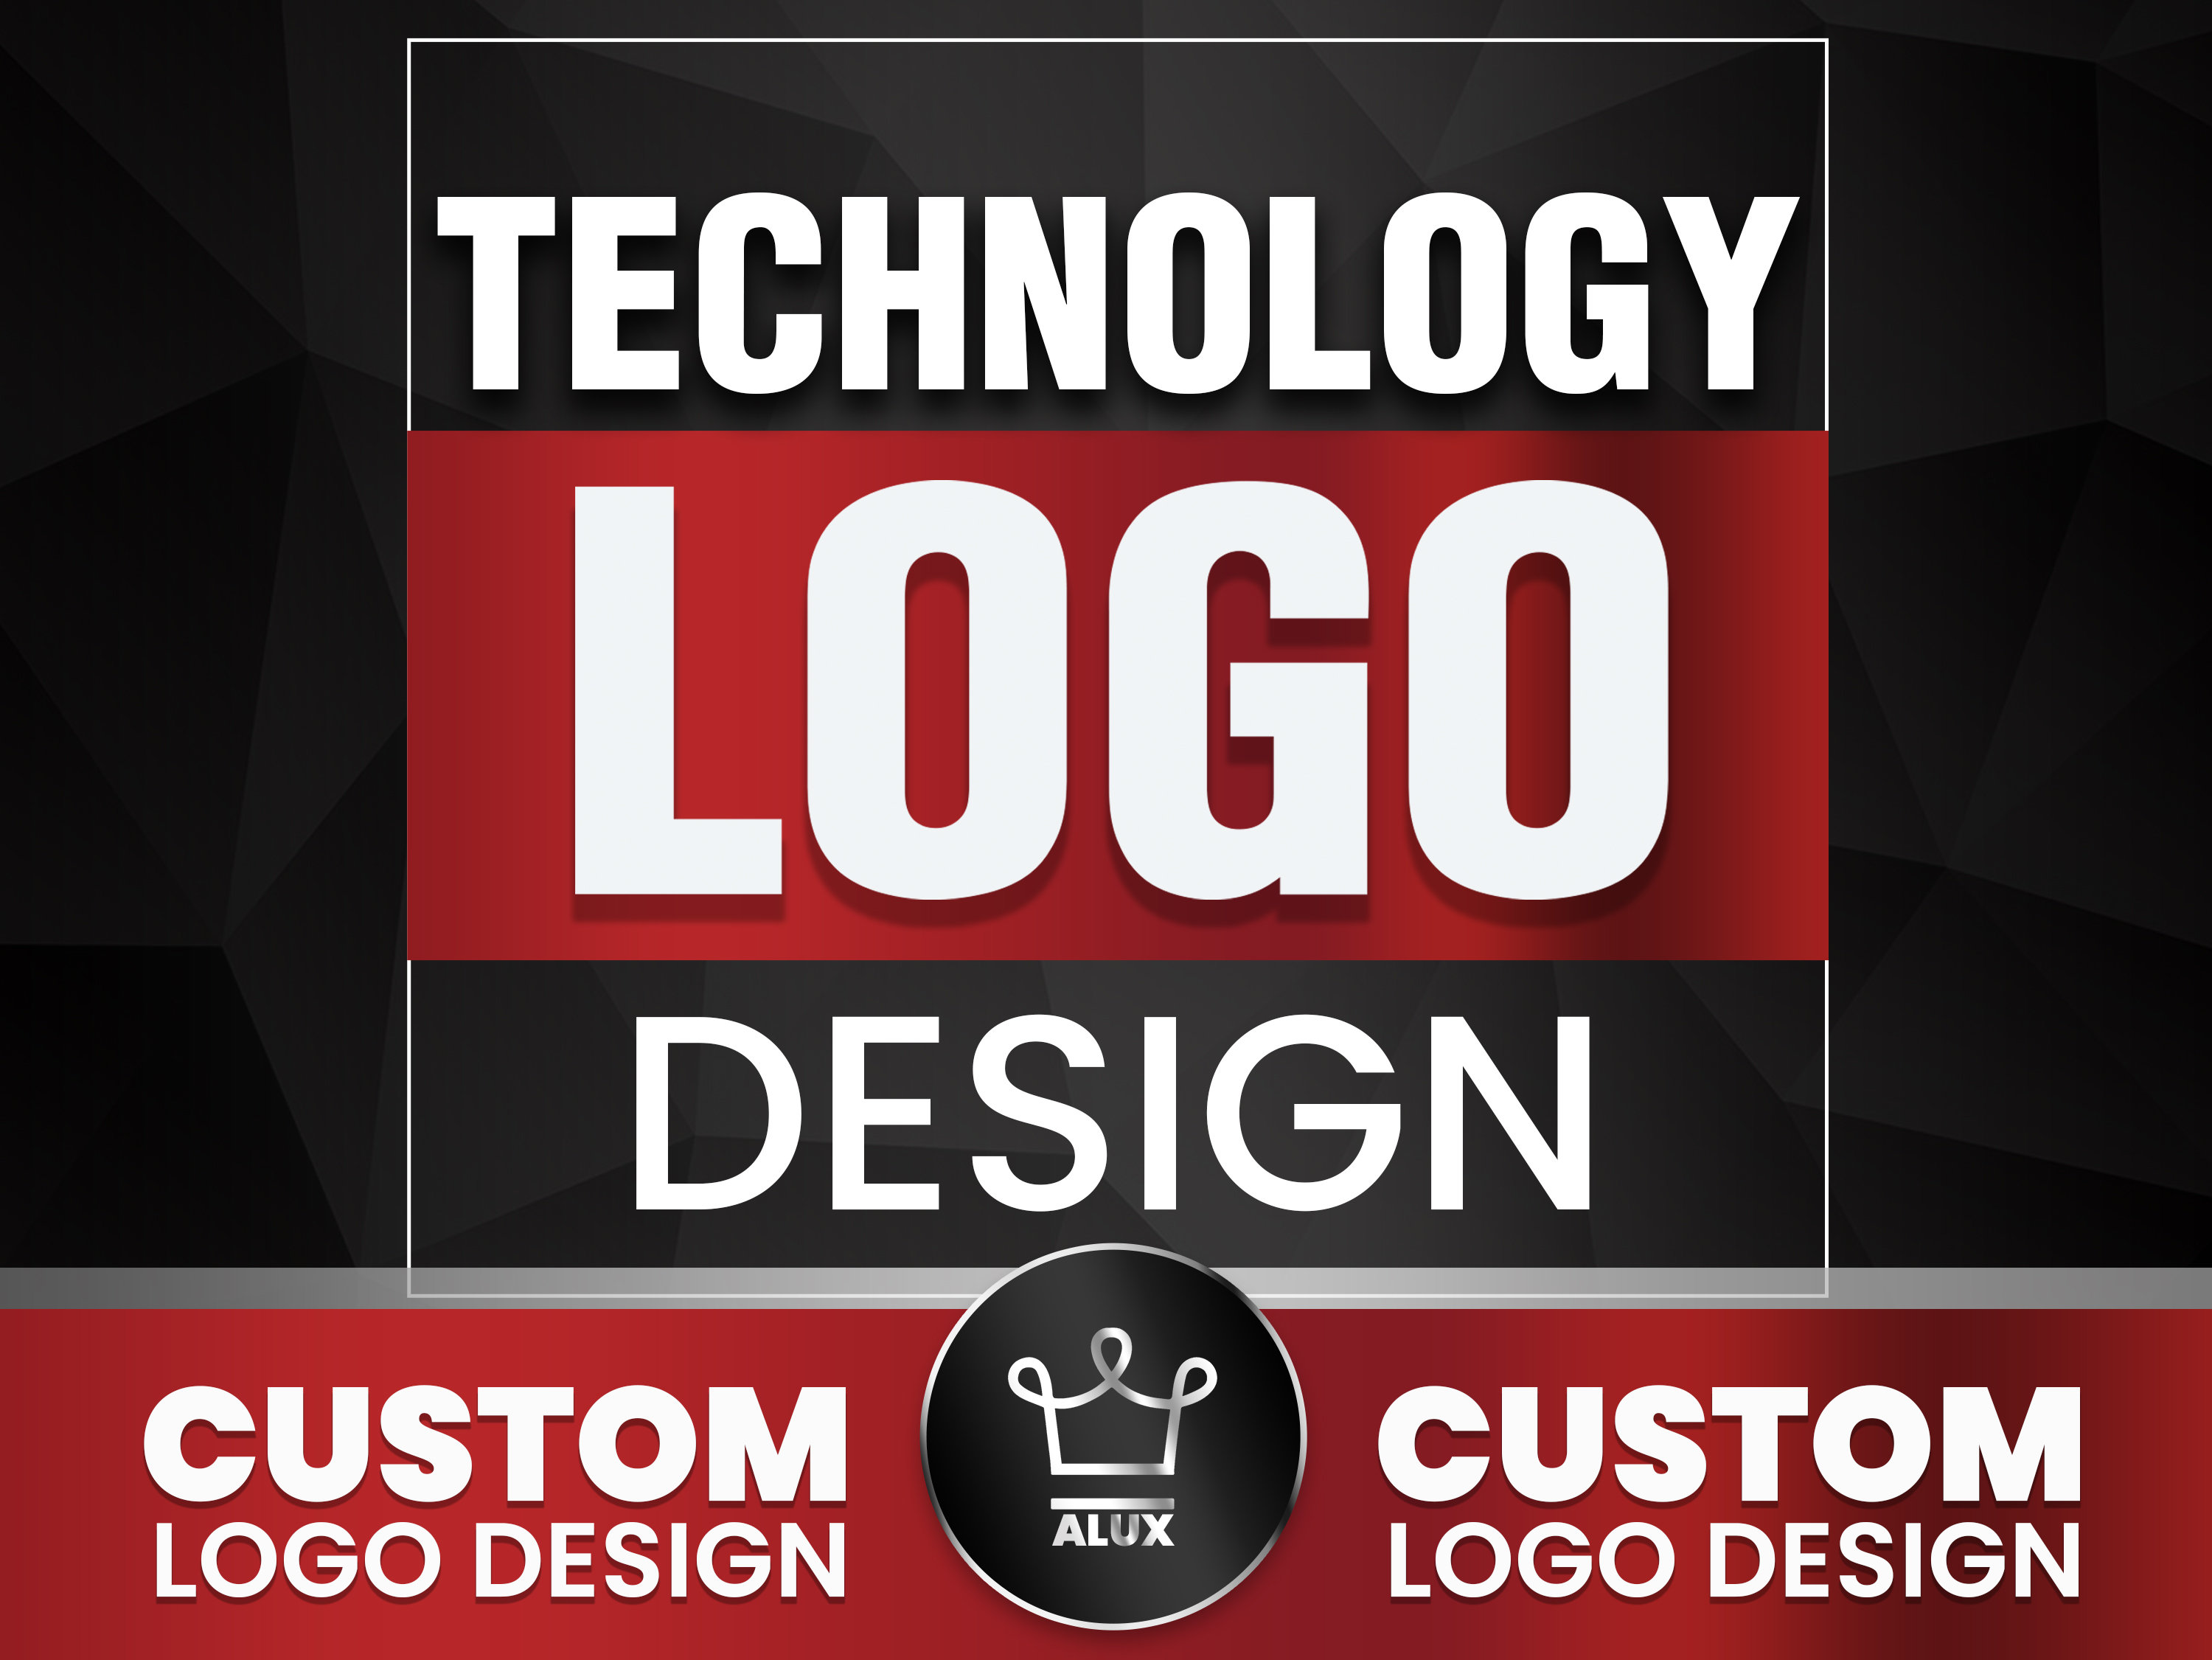 TECHNOLOGY LOGO Design Custom Technology Logo Design Service. | Etsy